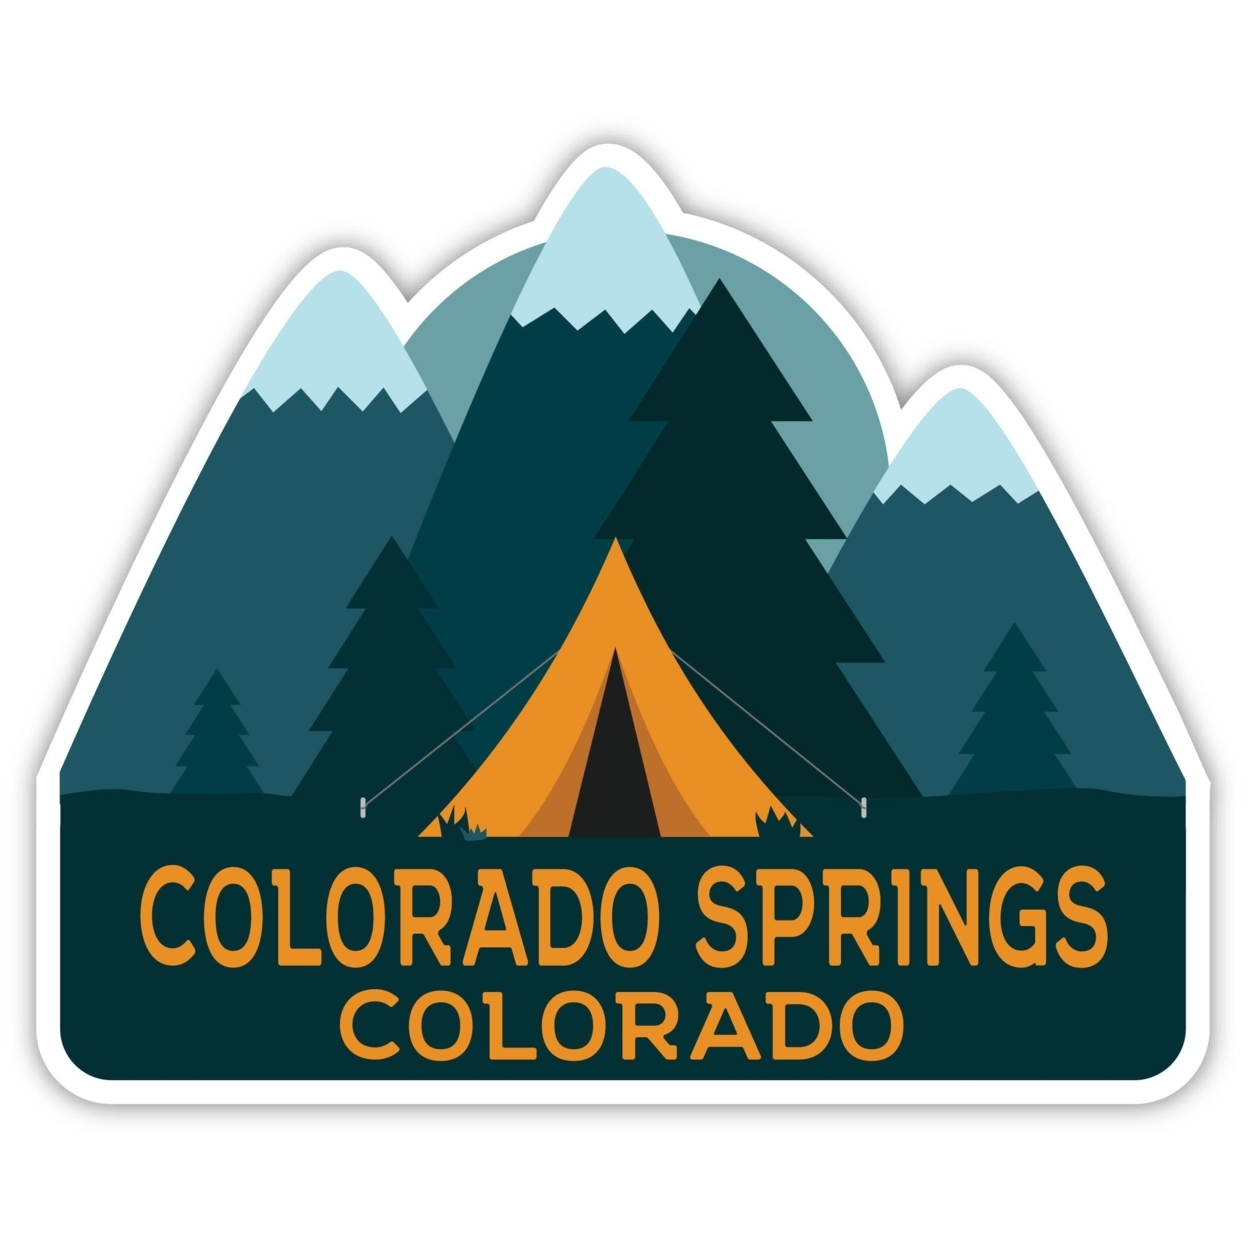 Colorado Springs Colorado Souvenir Decorative Stickers (Choose Theme And Size) - Single Unit, 10-Inch, Bear